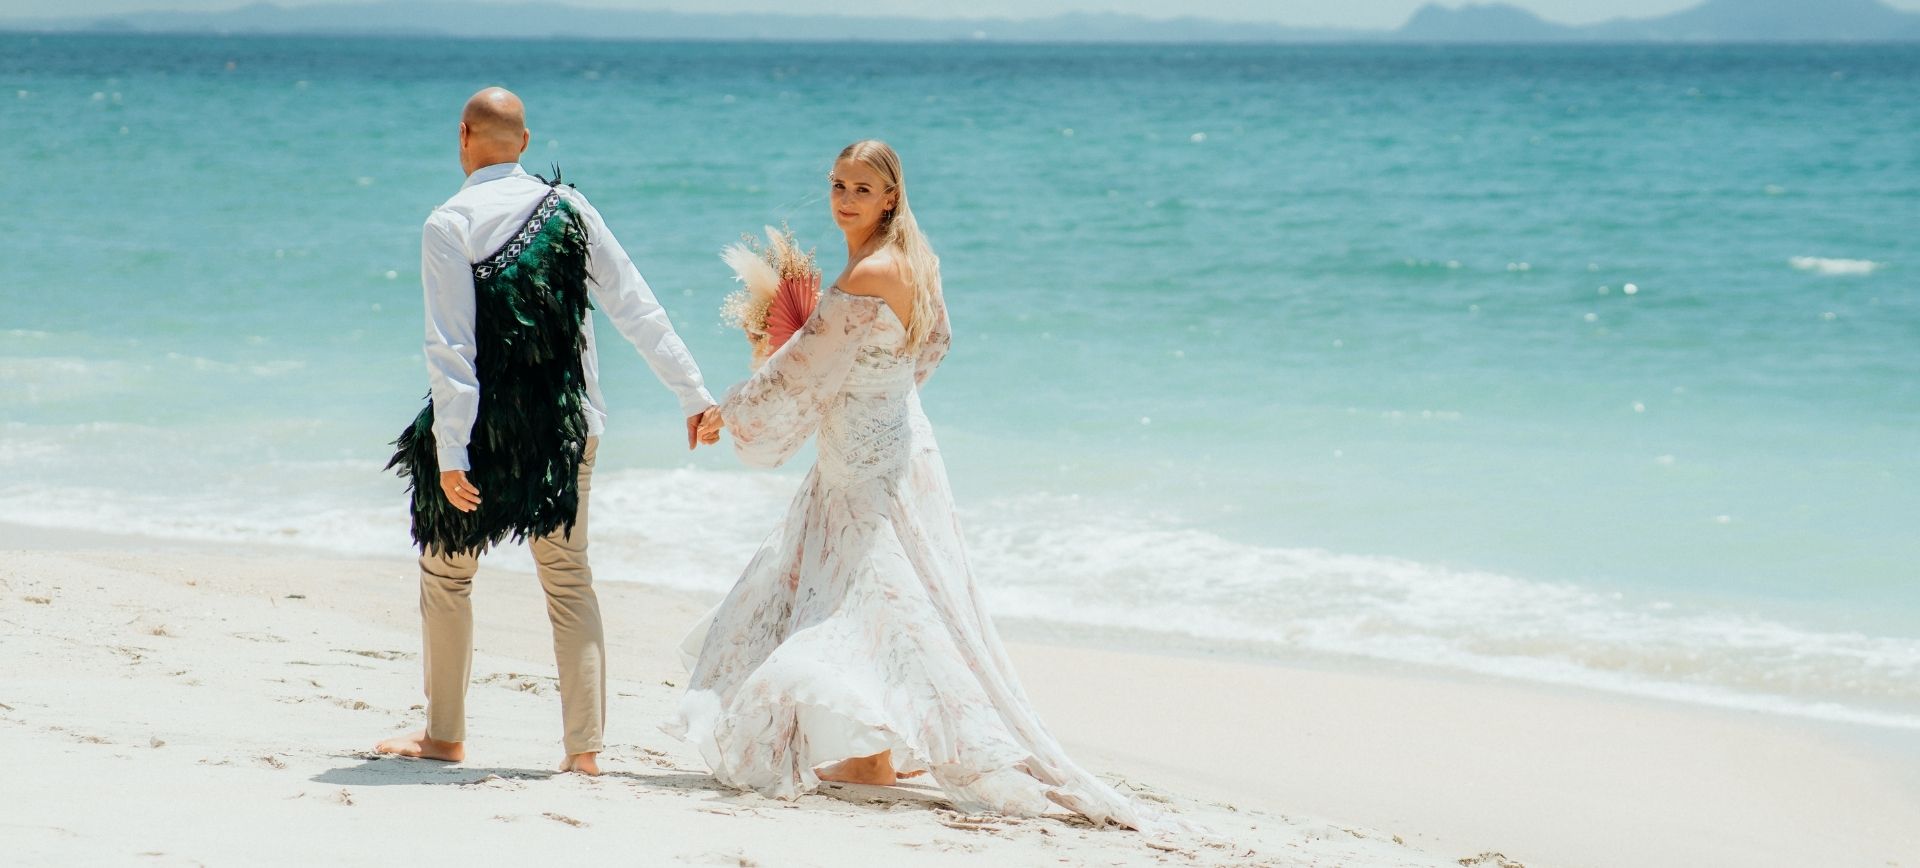 New Zealand elopement at the beach of Mangawhai